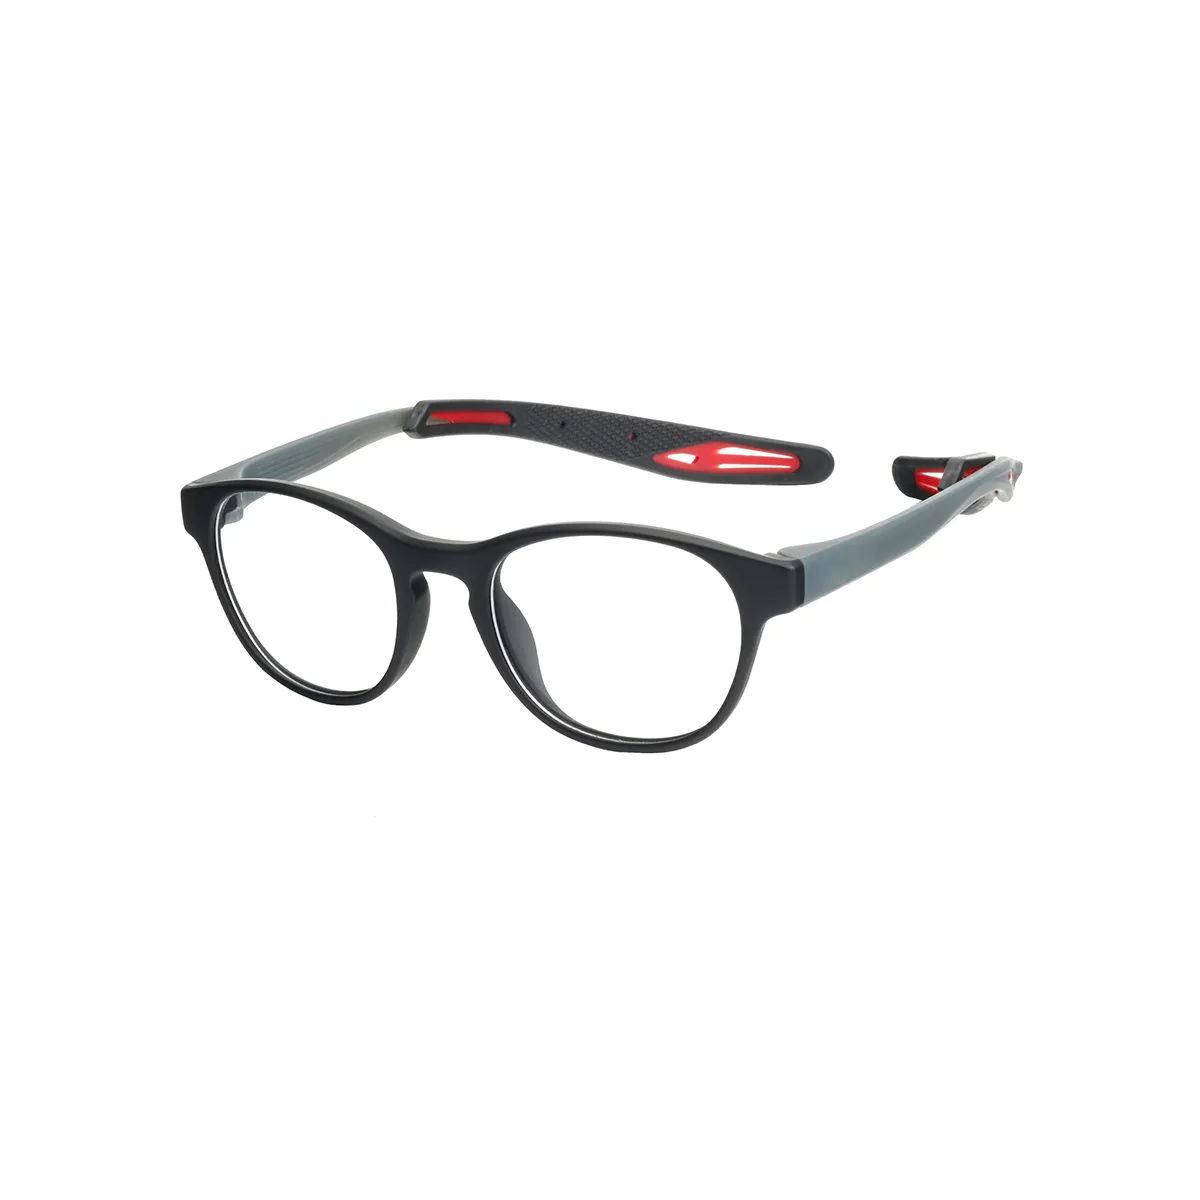 Sports Oval Black-Orange Eyeglasses for Men